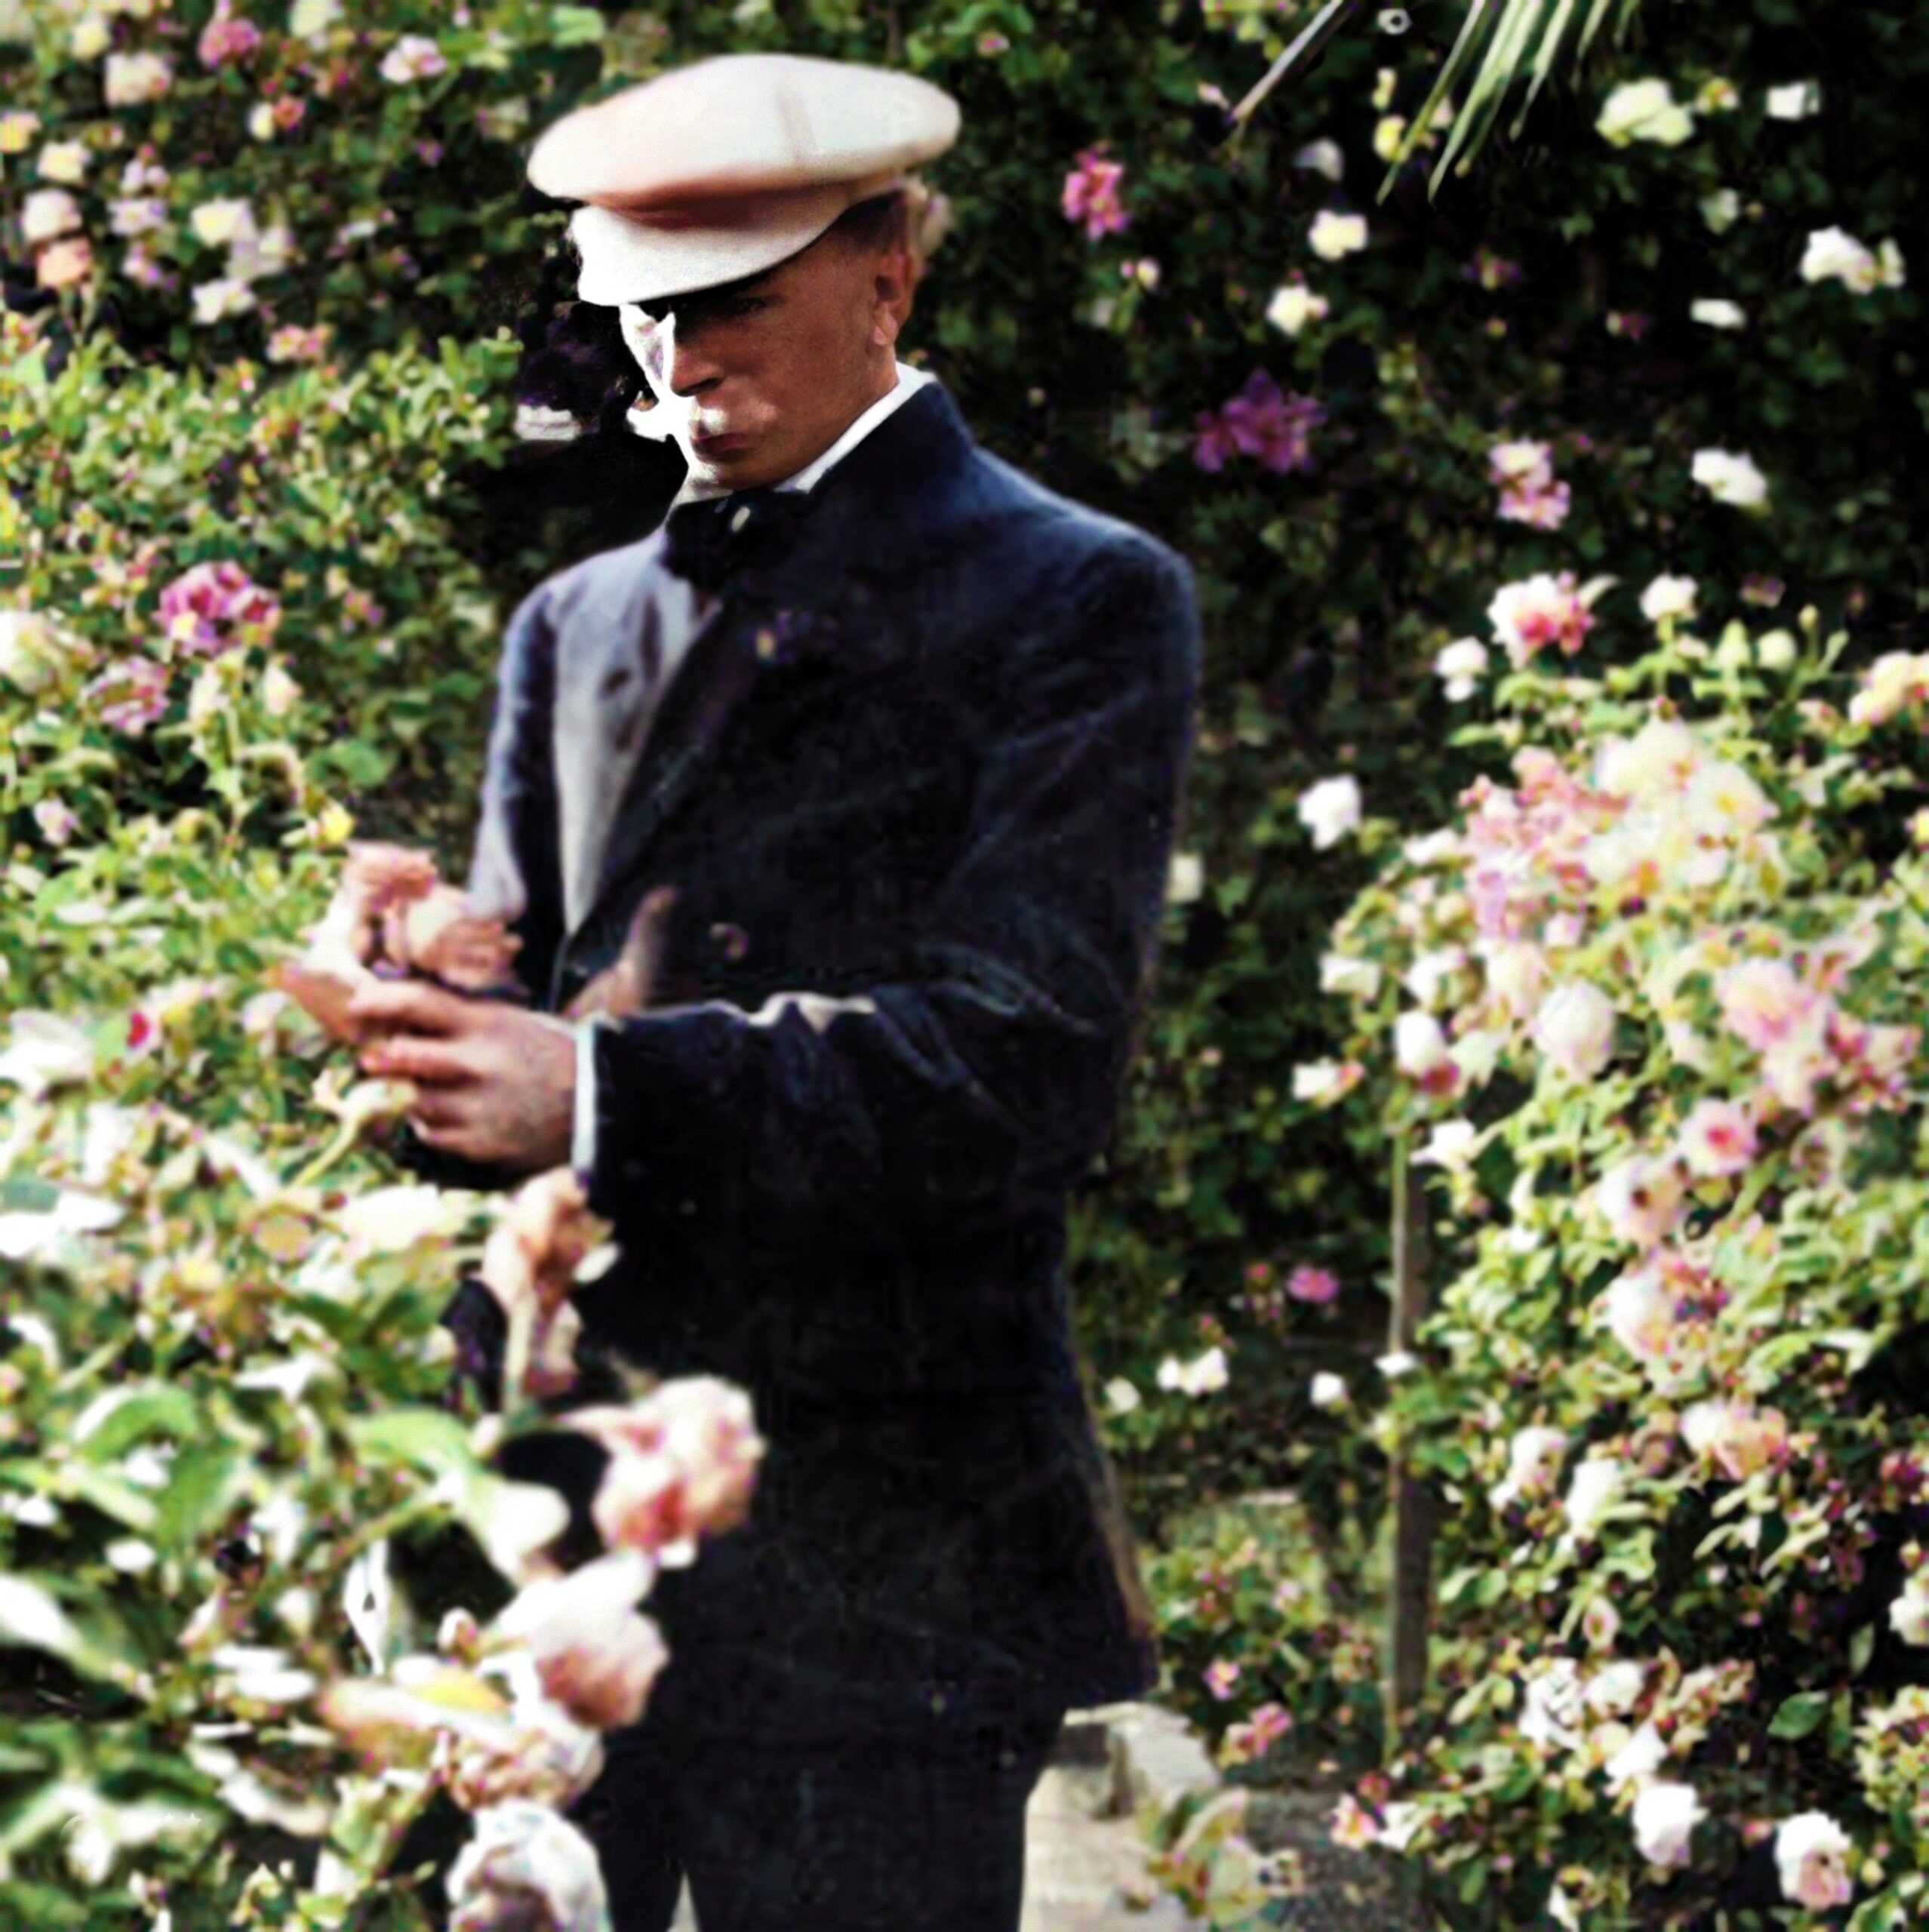 Paul de Longpré inspecting roses - enhanced and colorized